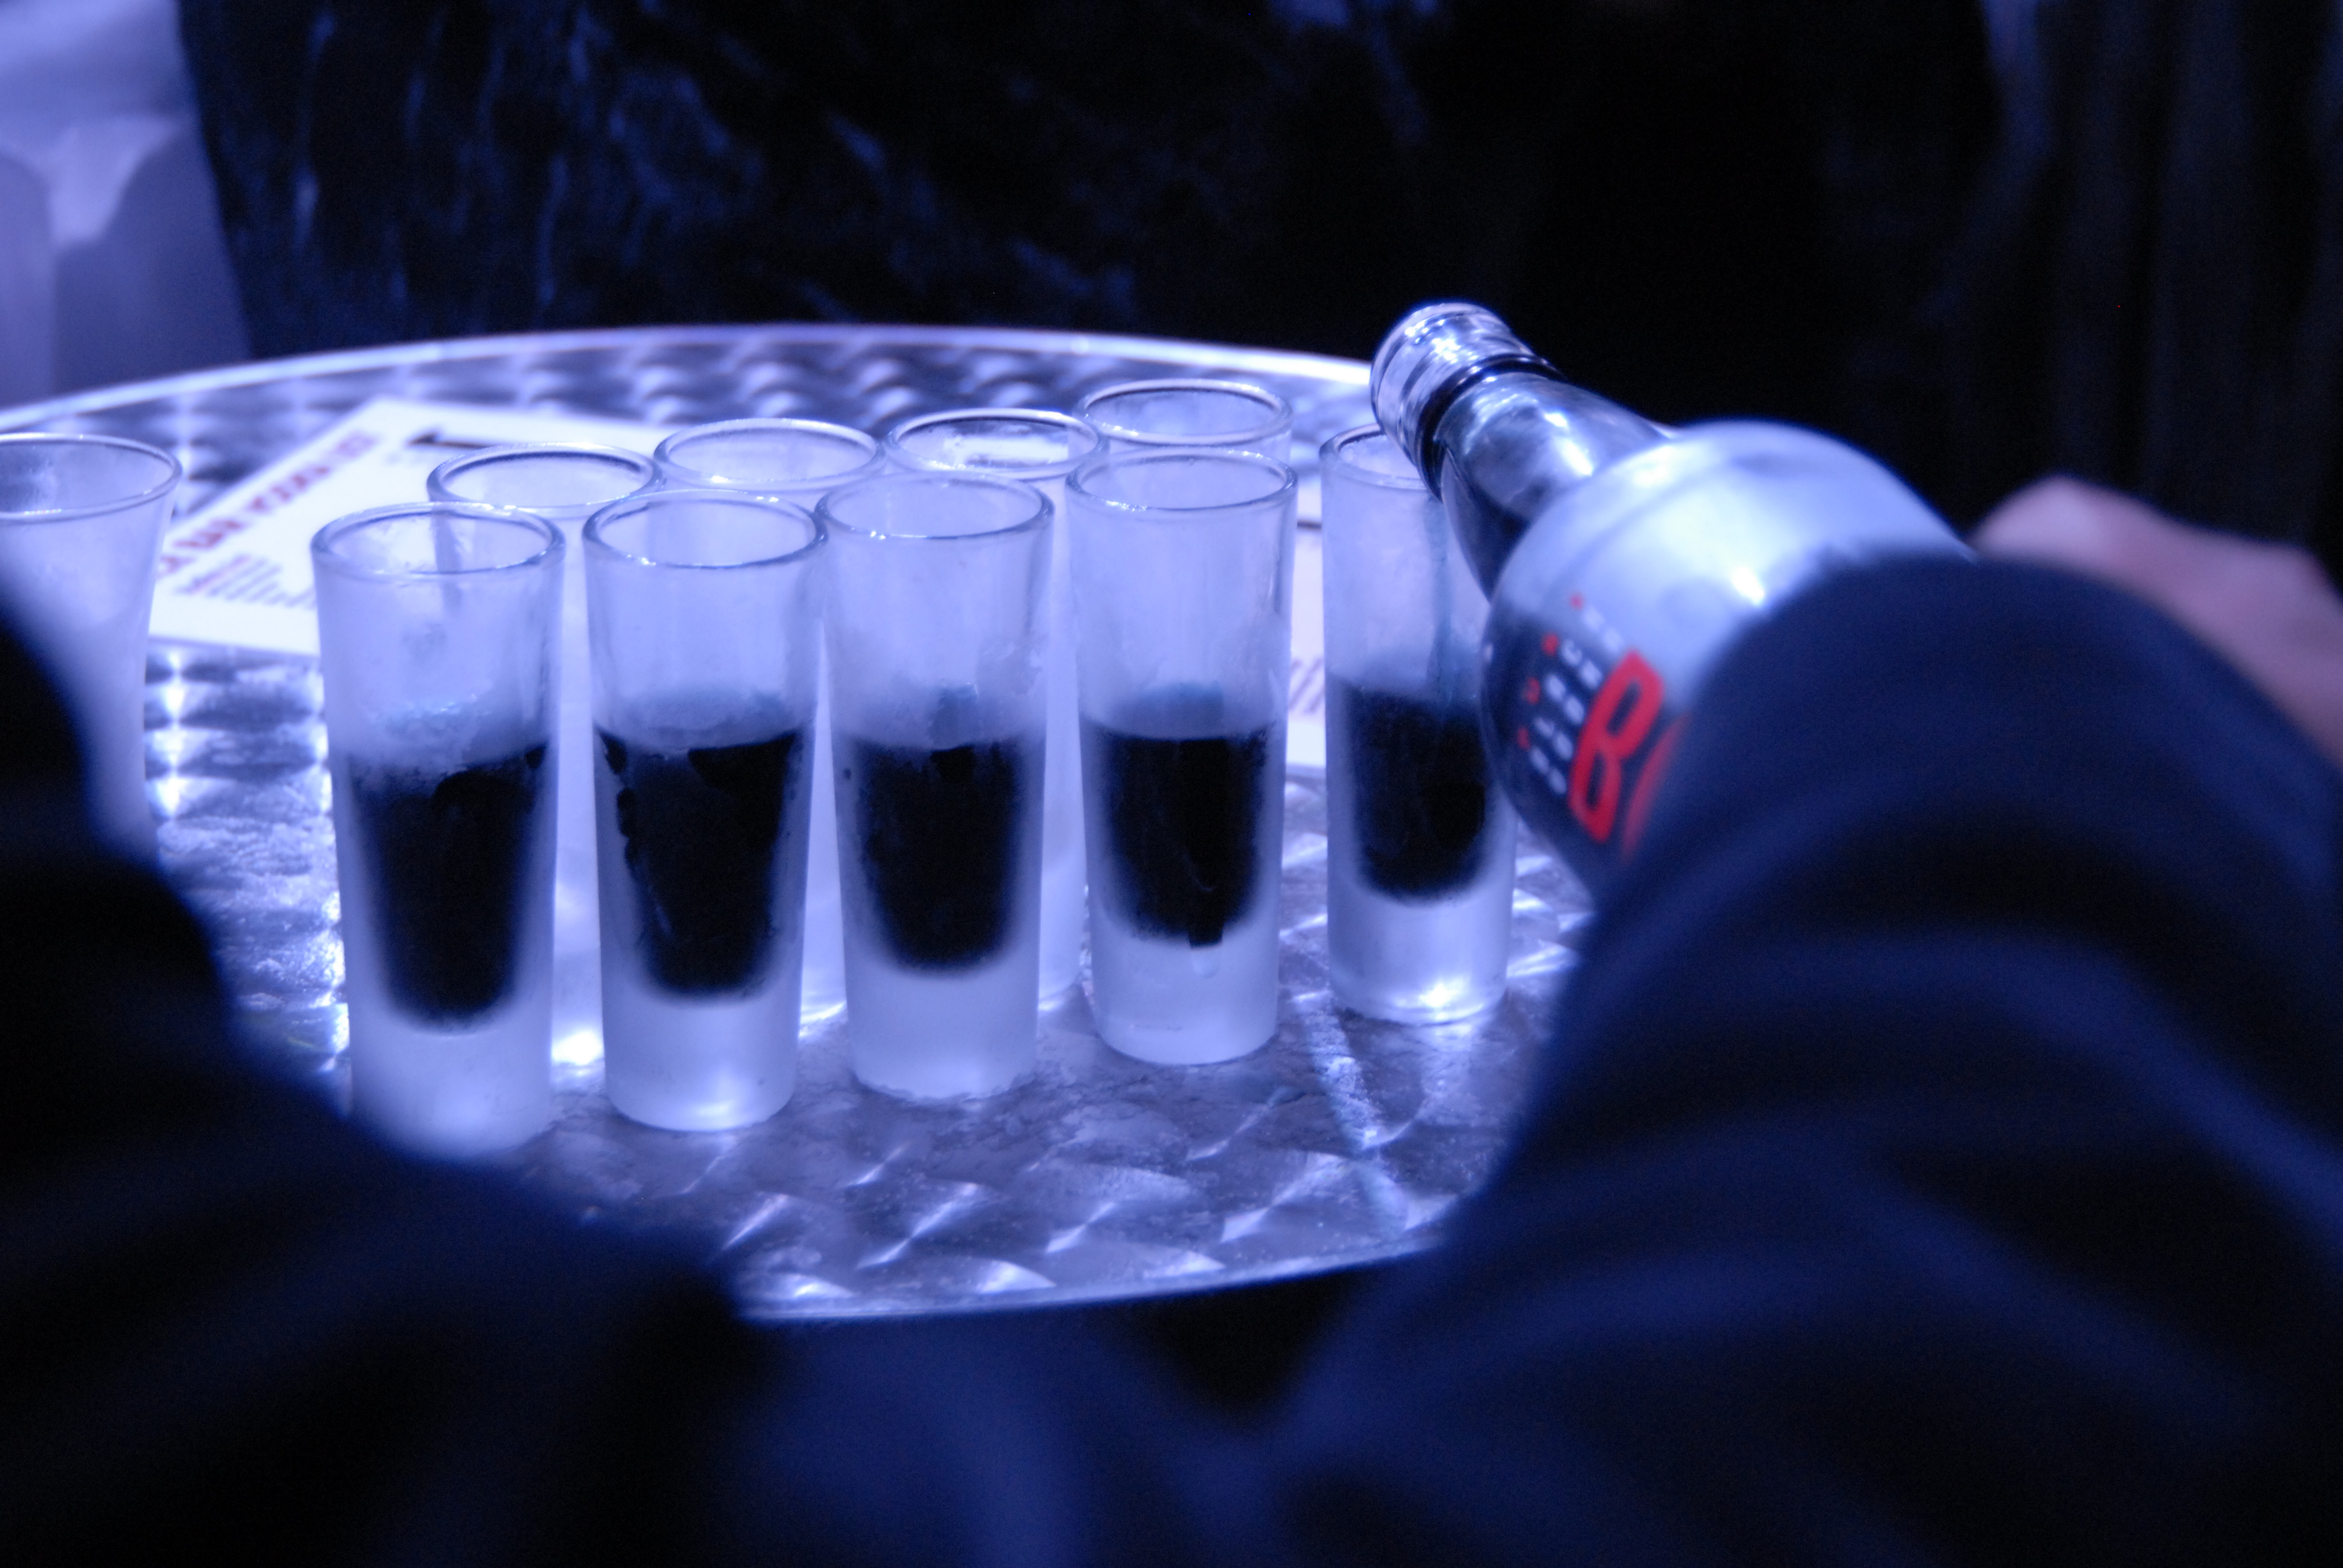 Black Vodka at the Ice Bar